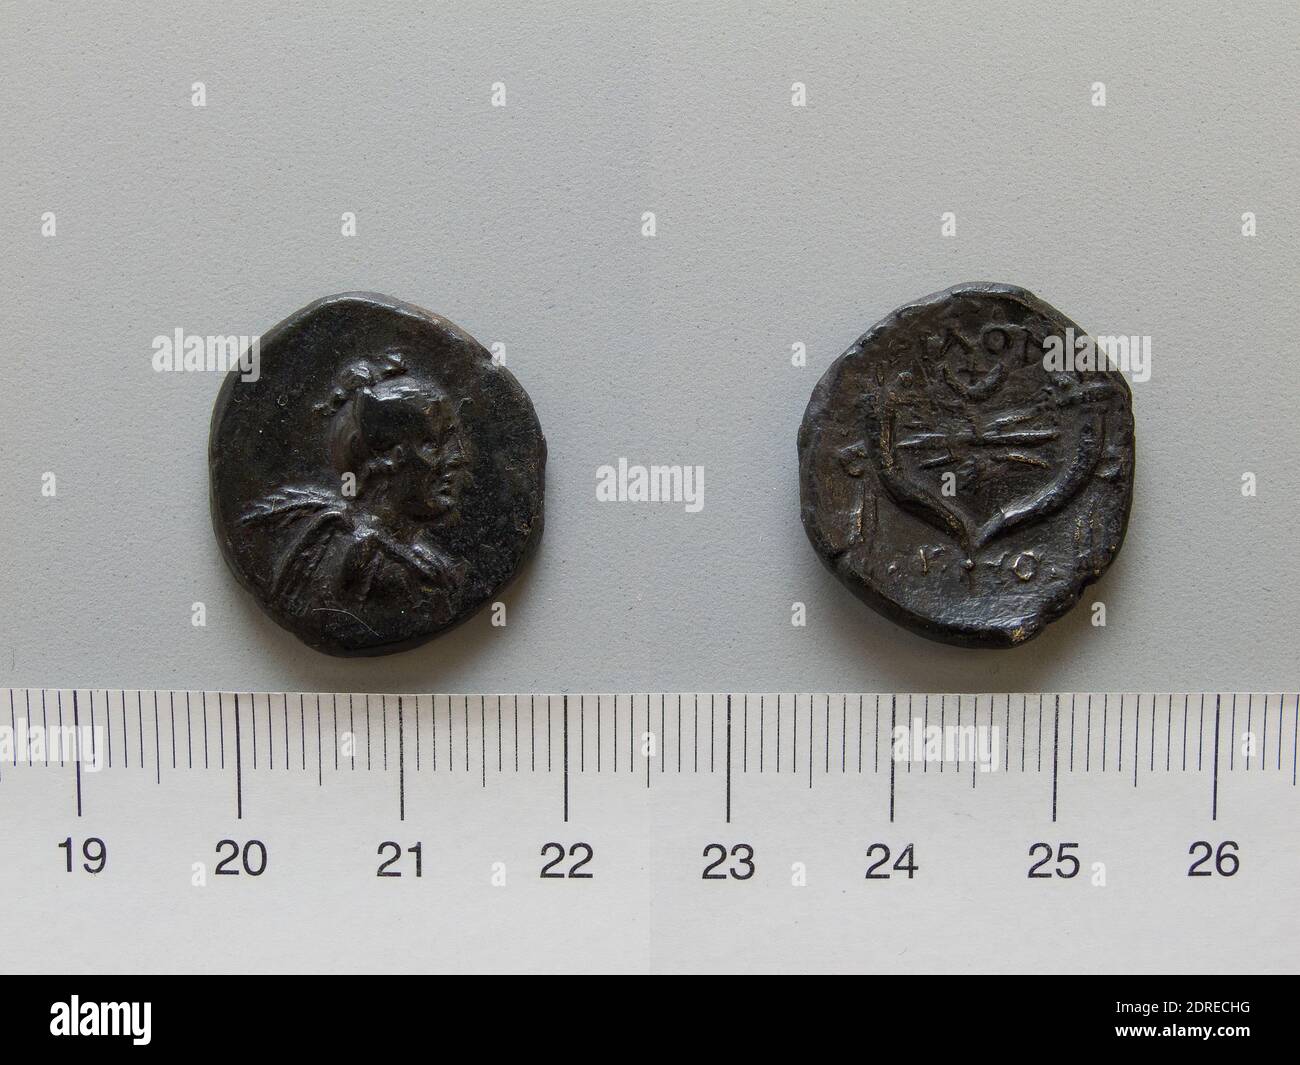 Mint: Philomelium, Coin from Philomelium, 199–100 B.C., Copper, 7.12 g, 12:00, 22 mm, Made in Philomelium, Phrygia, Greek, 2nd century B.C., Numismatics Stock Photo